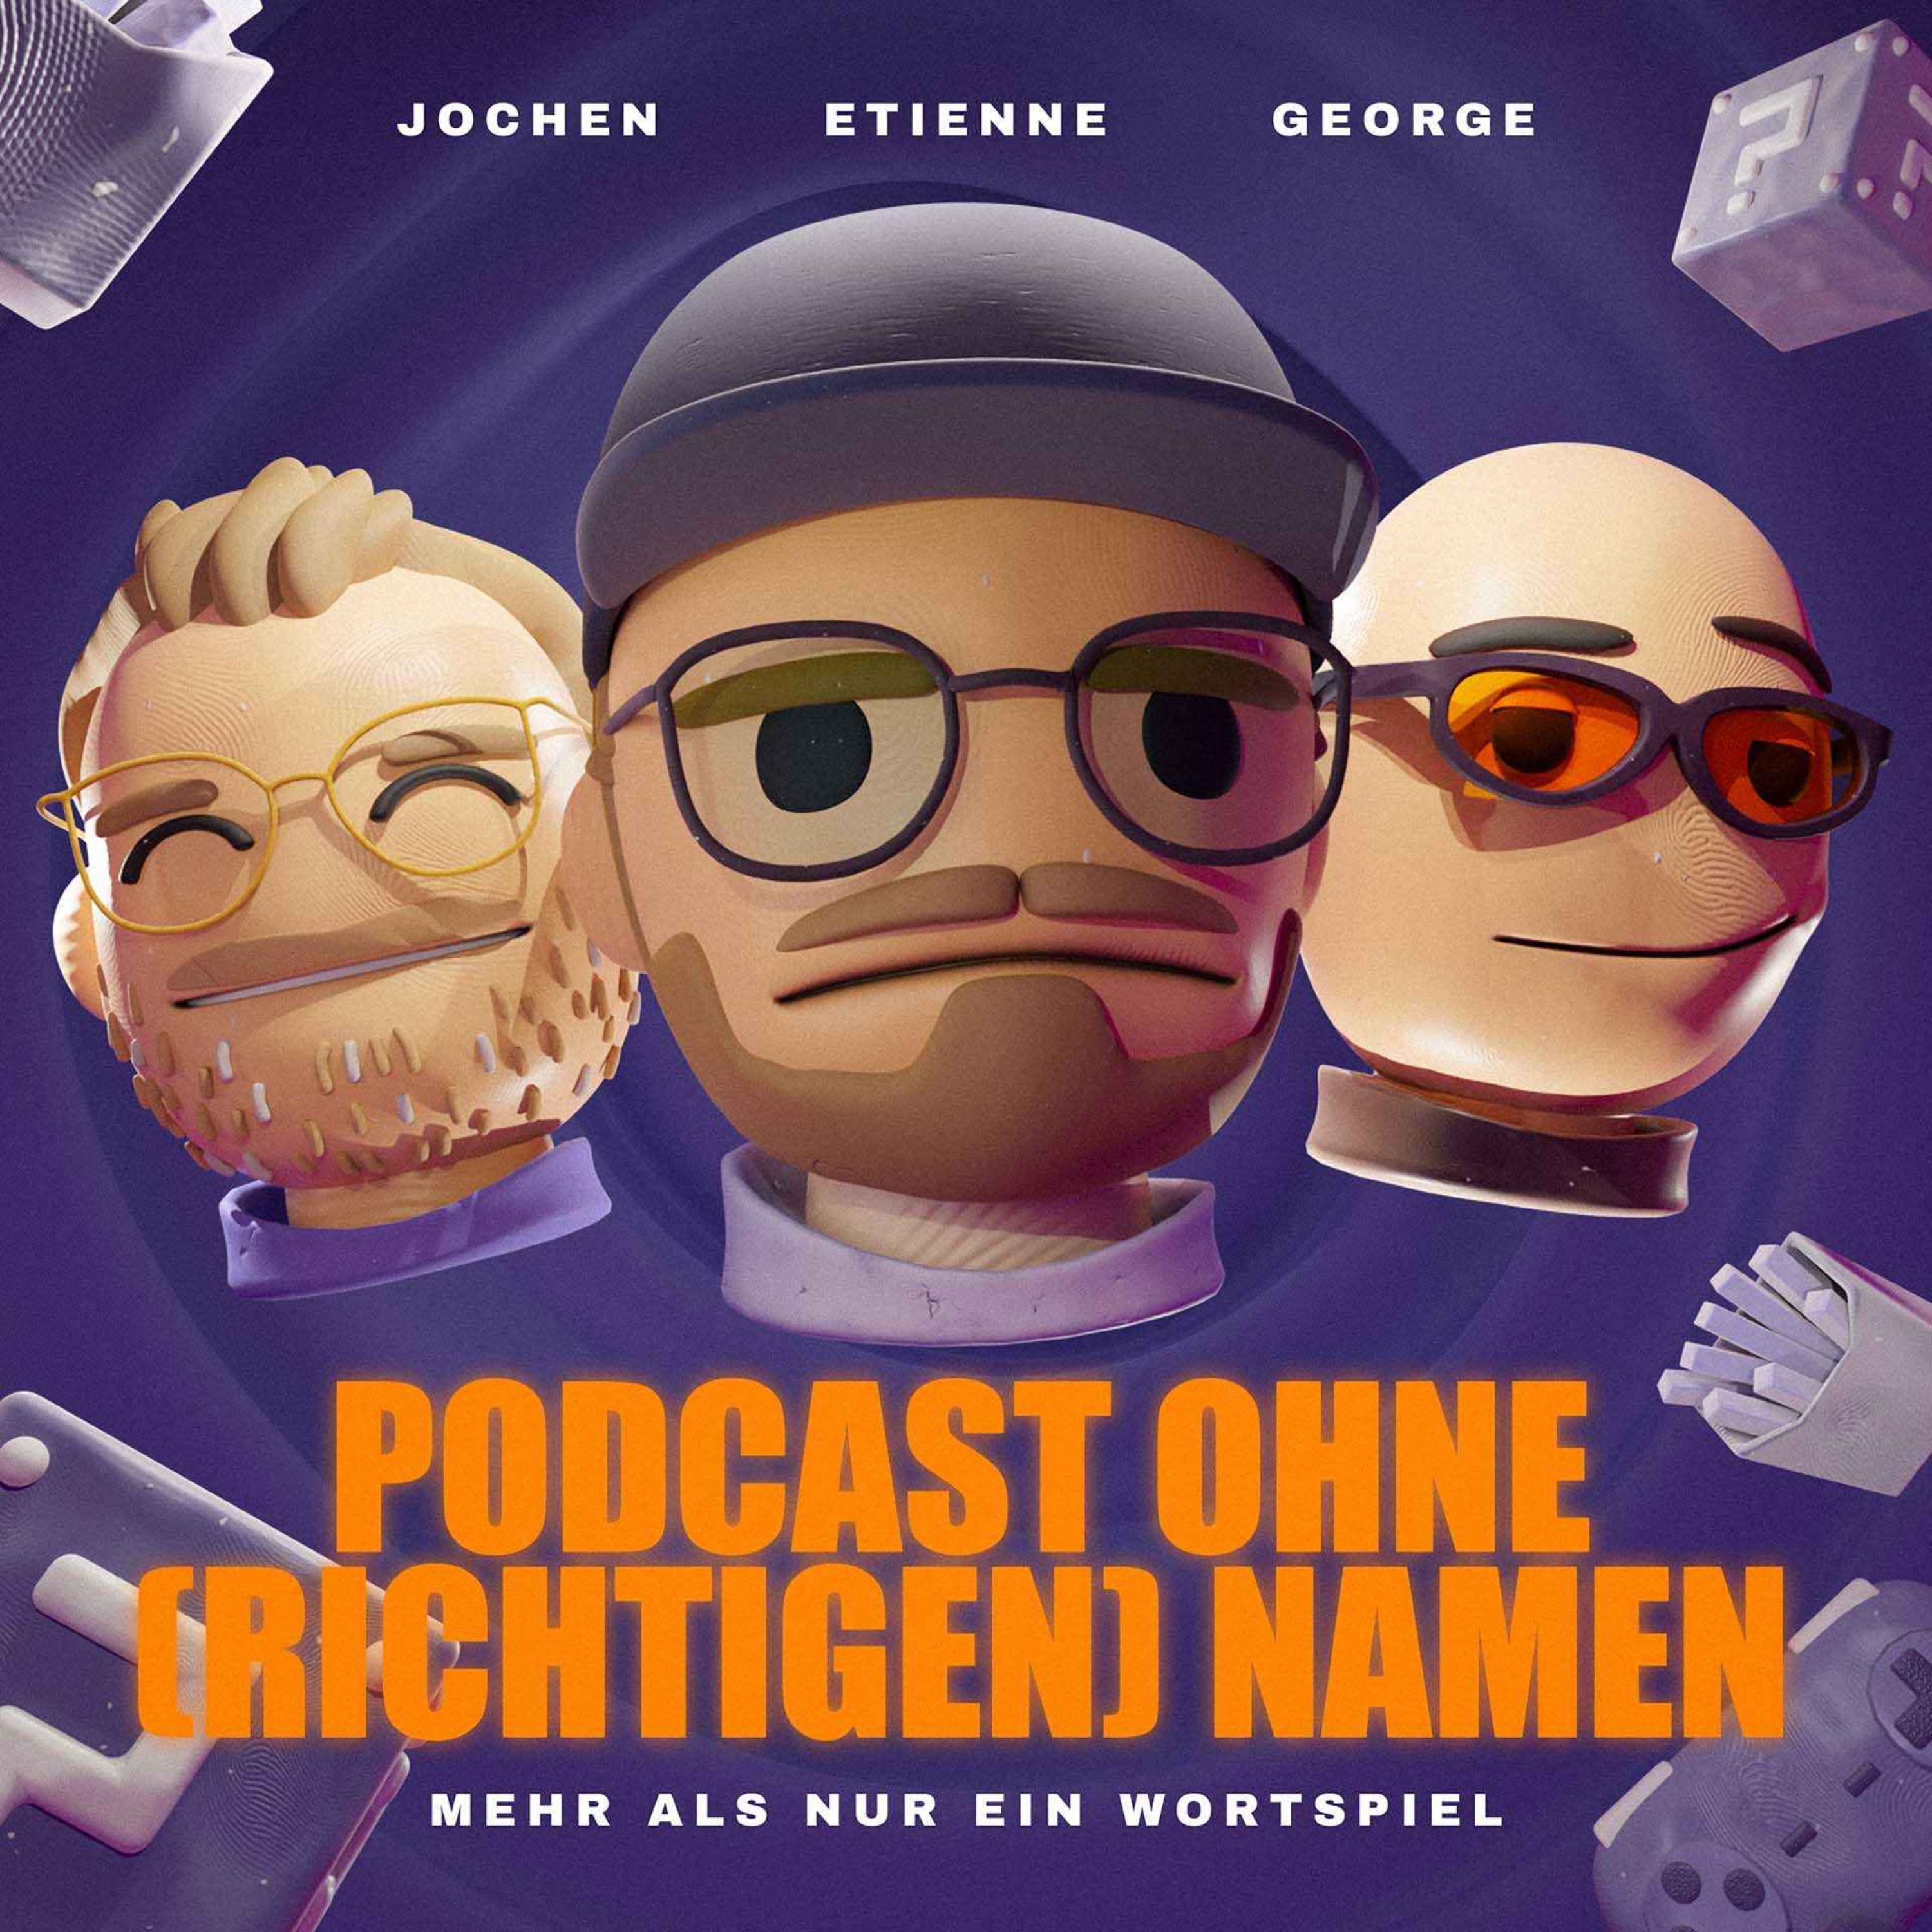 Podcast ohne (richtigen) Namen:Gardé, Dominicus, Zaal